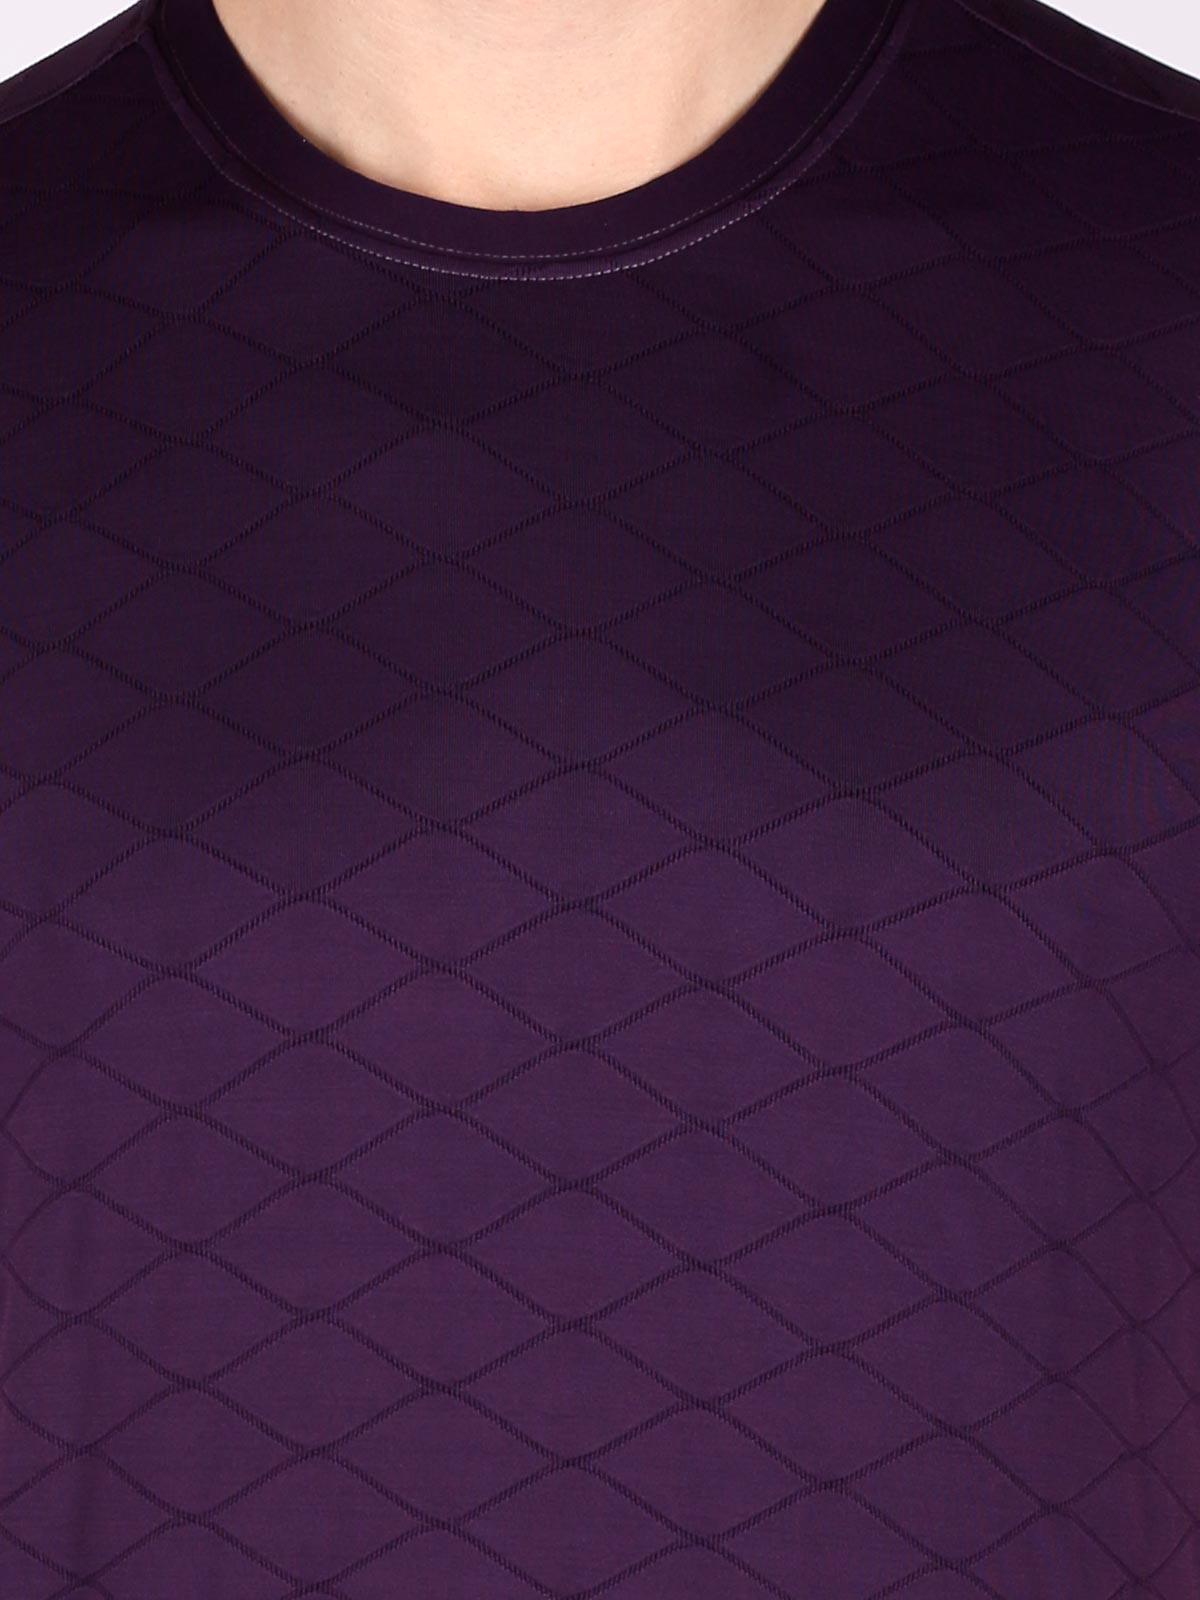  dark purple diamond tshirt  - 88010 € 6.75 img3